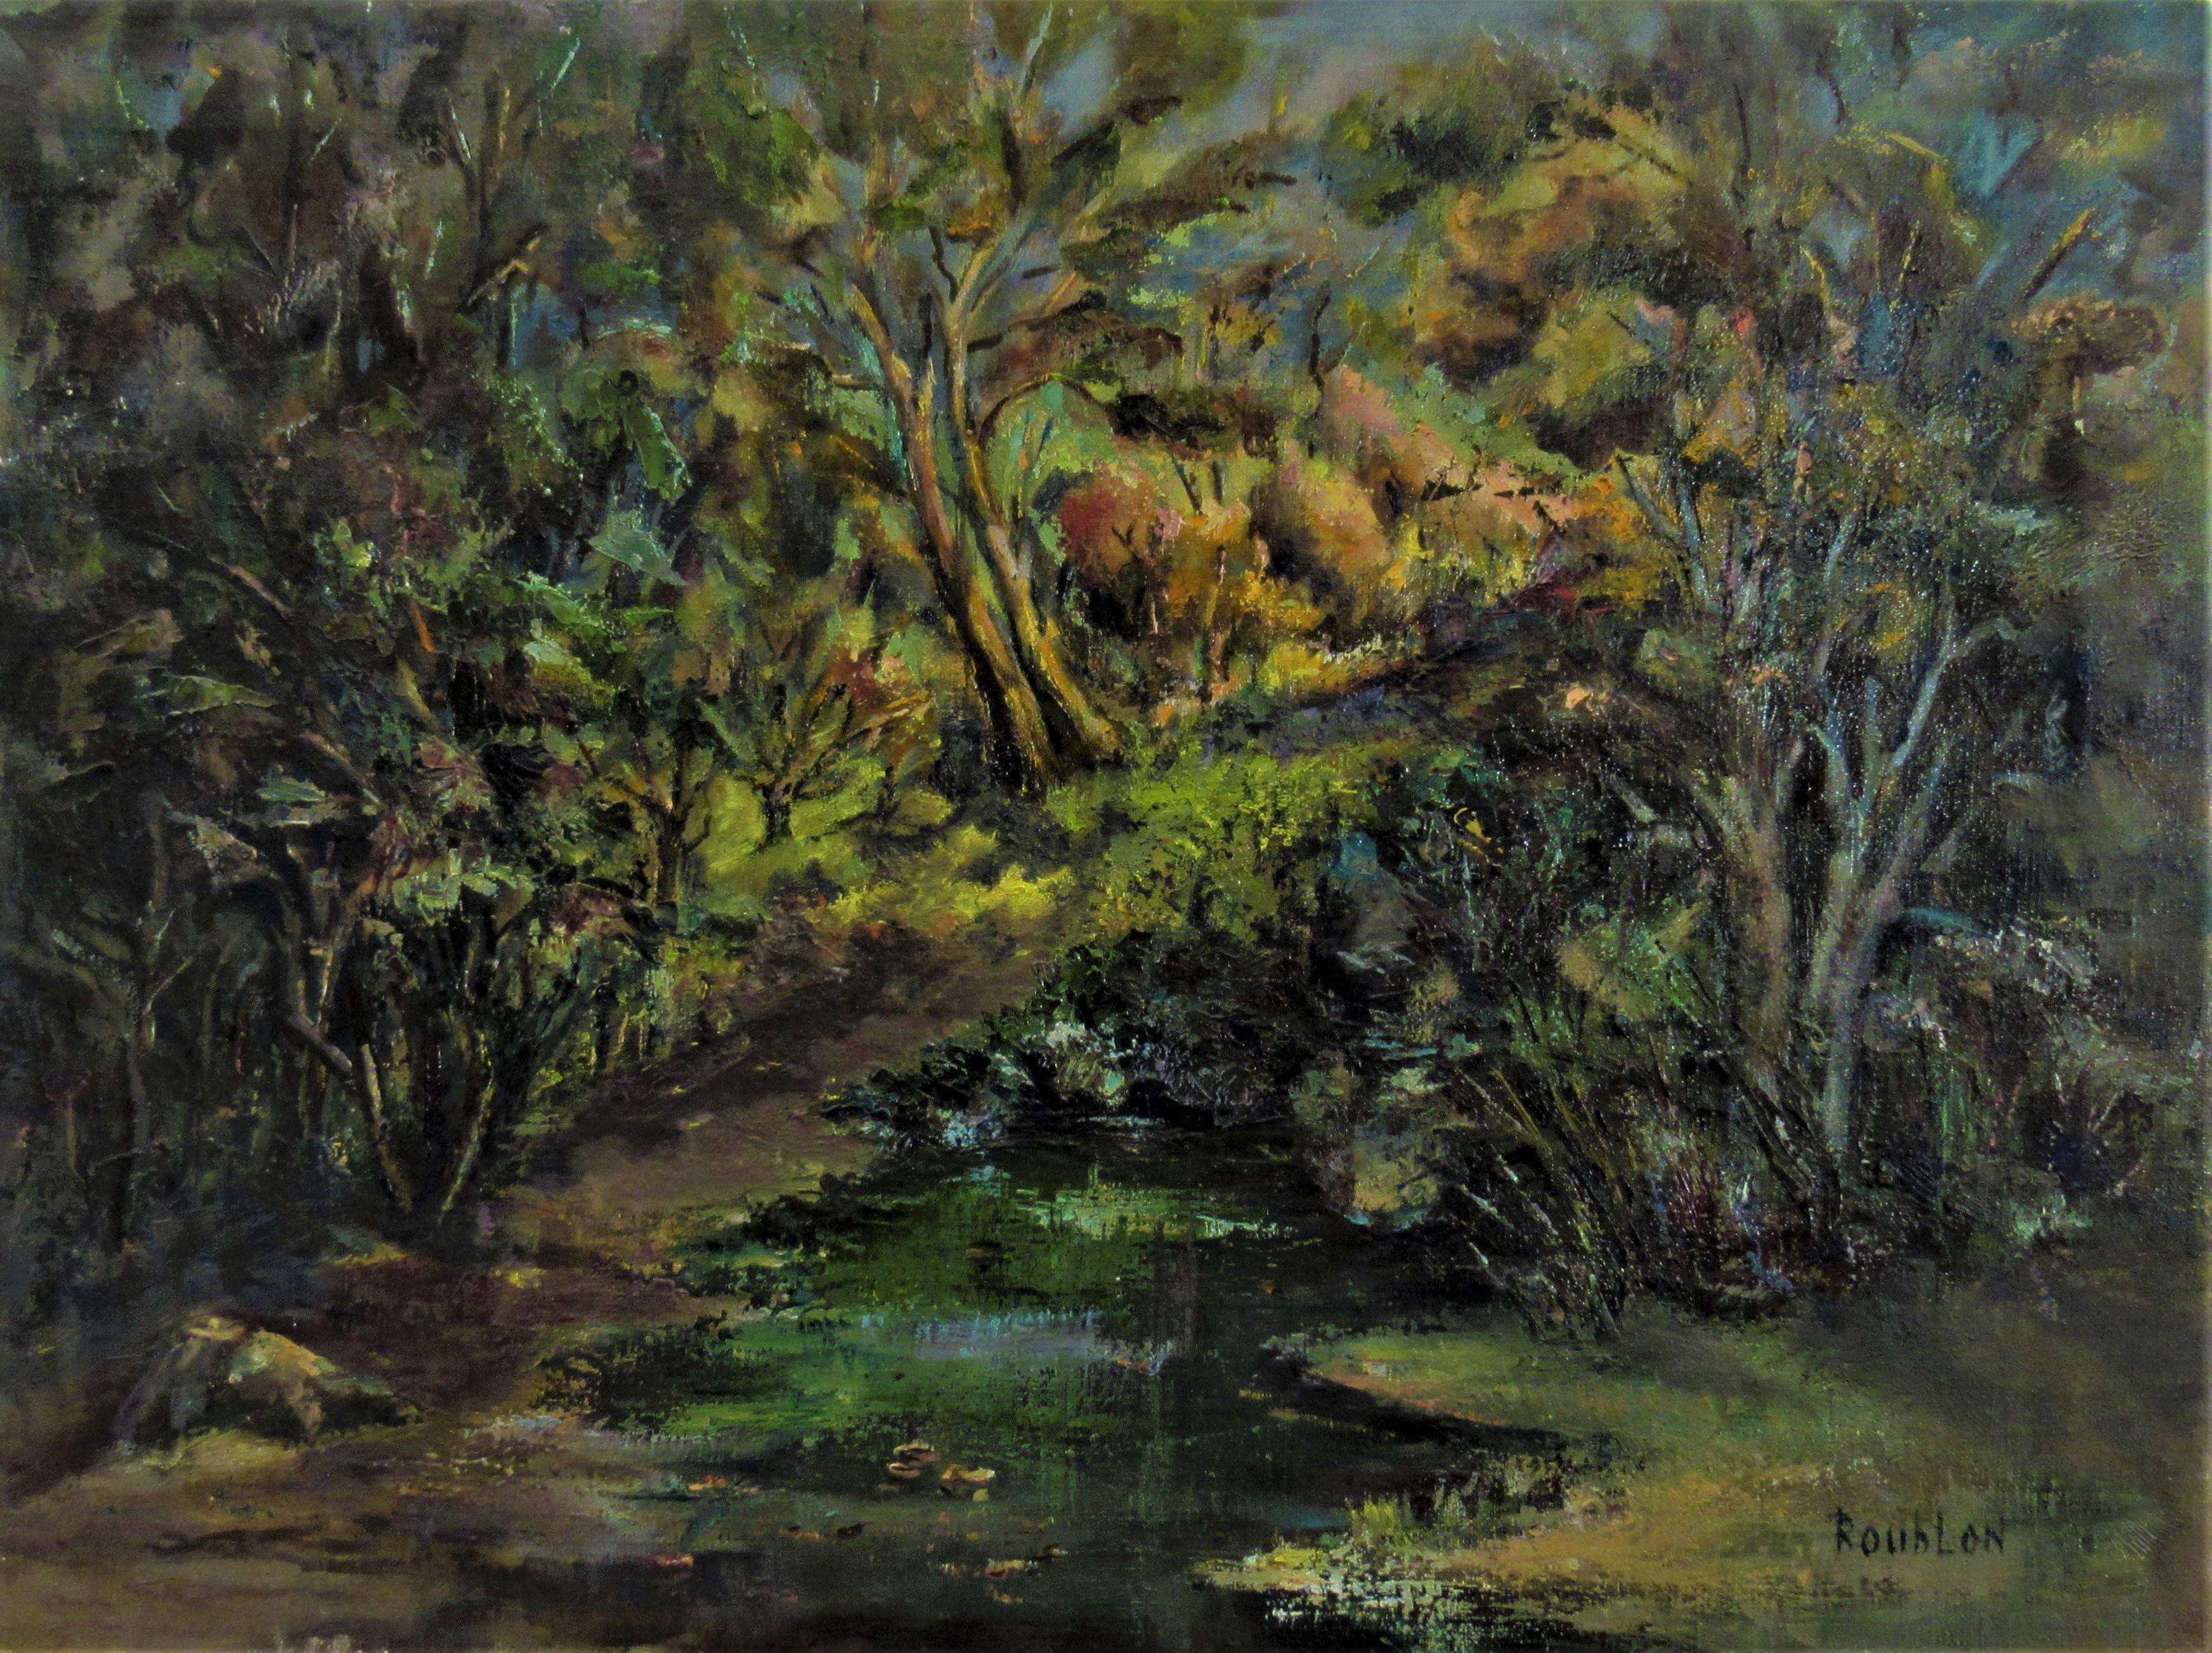 Irina Belotelkin Roublon Figurative Painting - Landscape with River